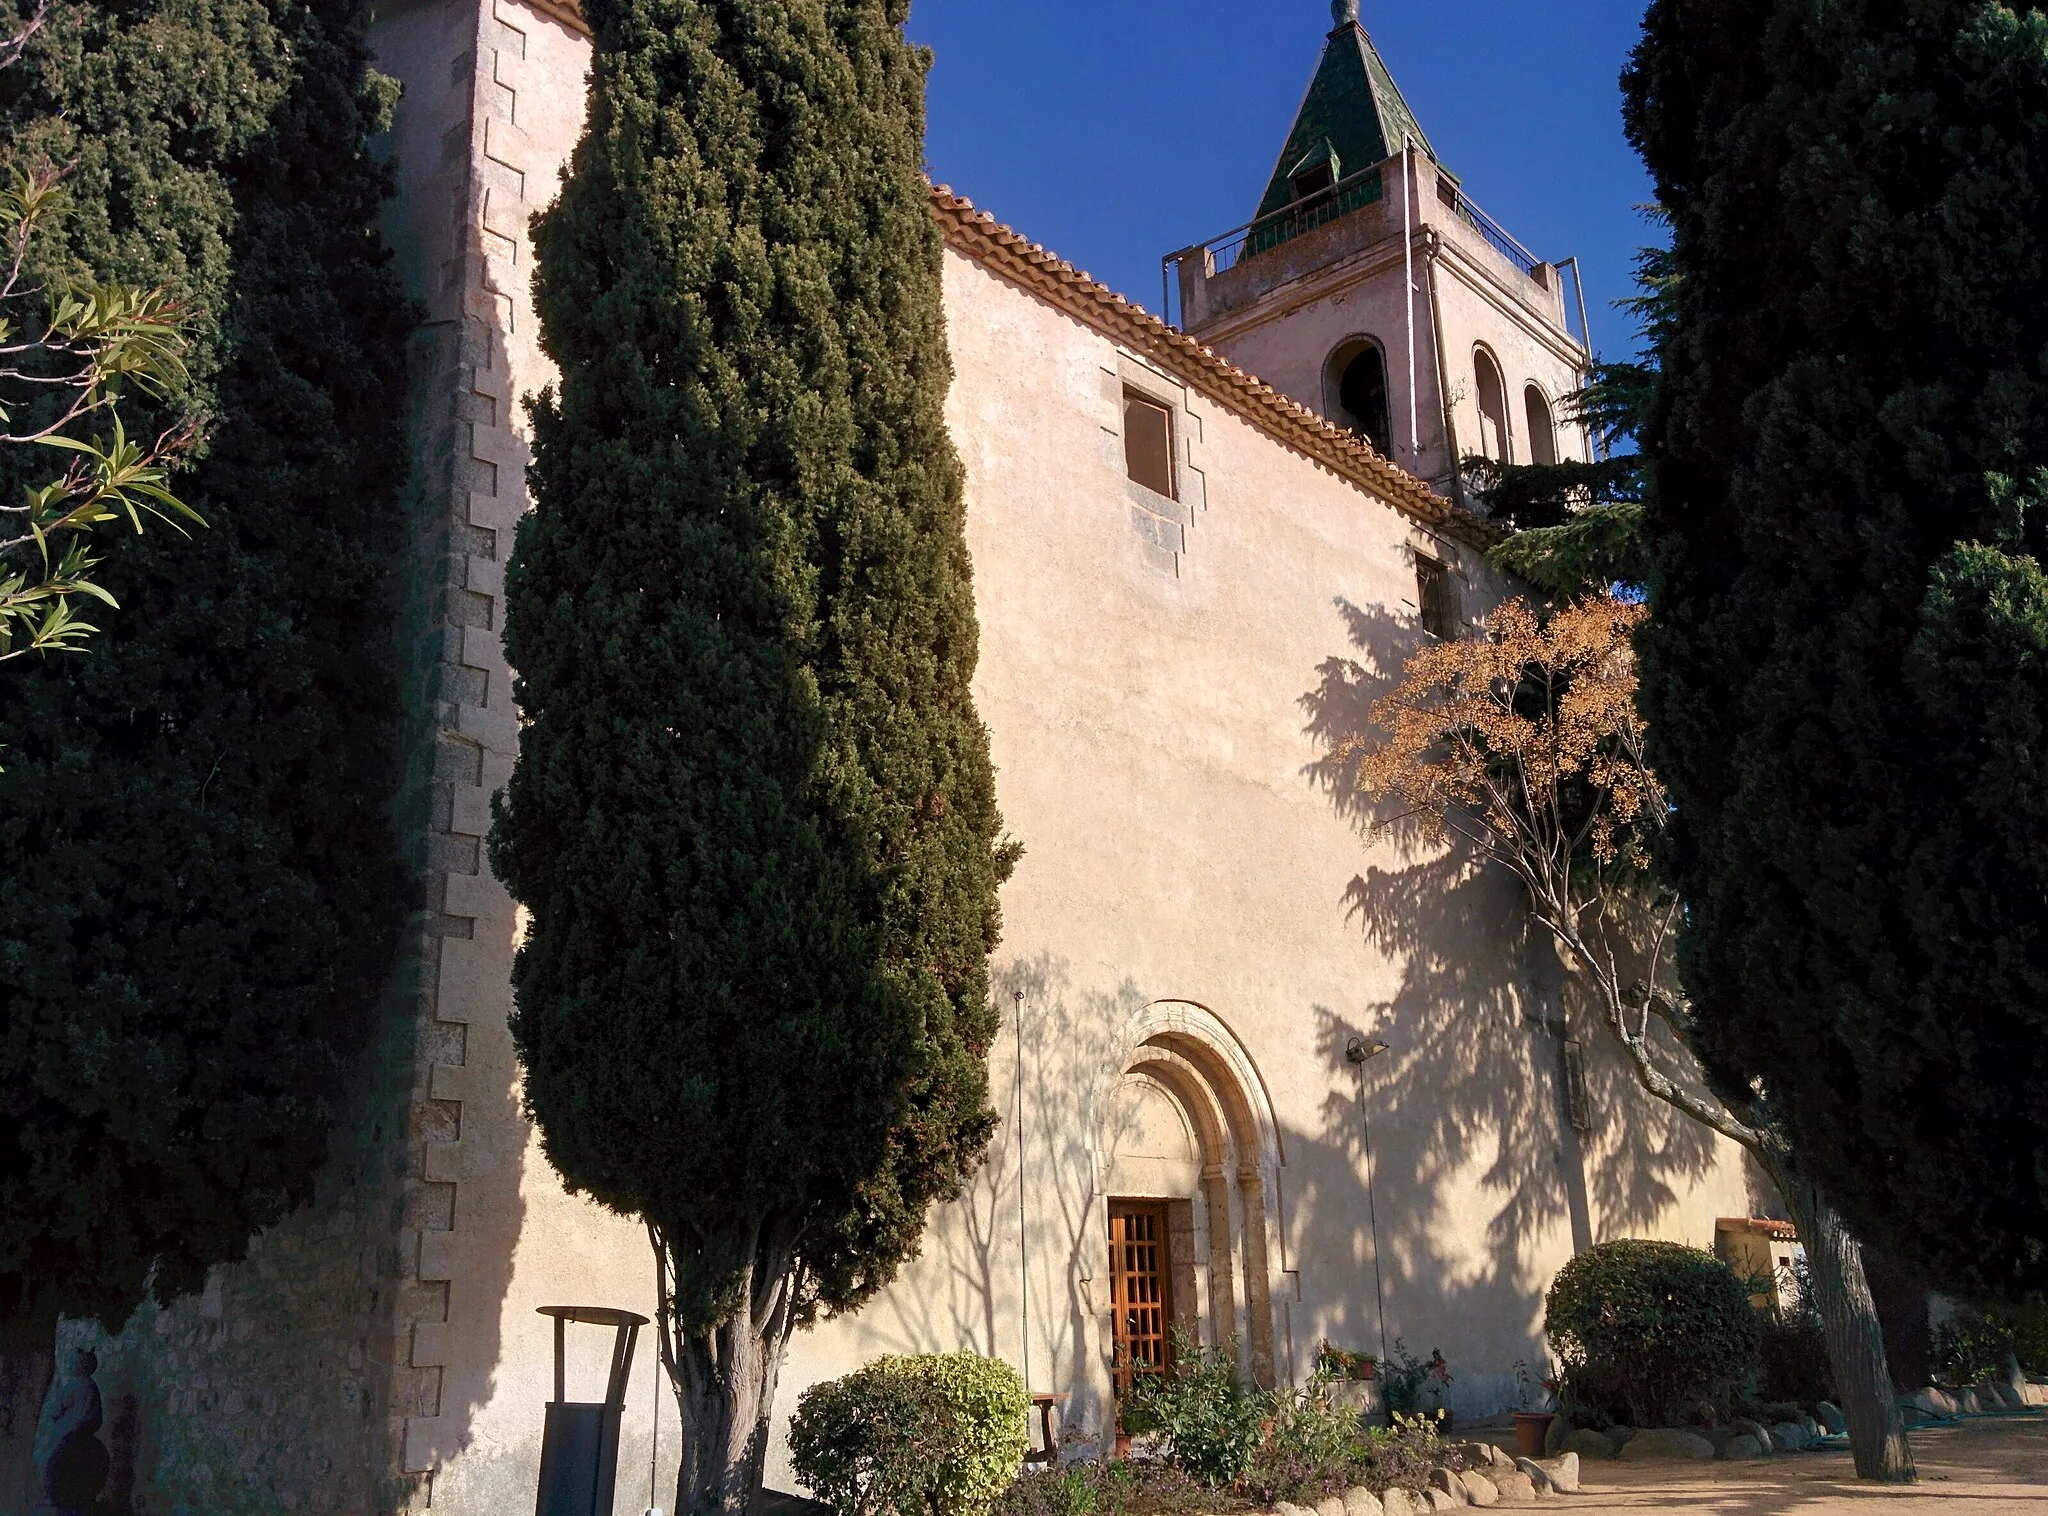 Image of Santa Cristina d'Aro